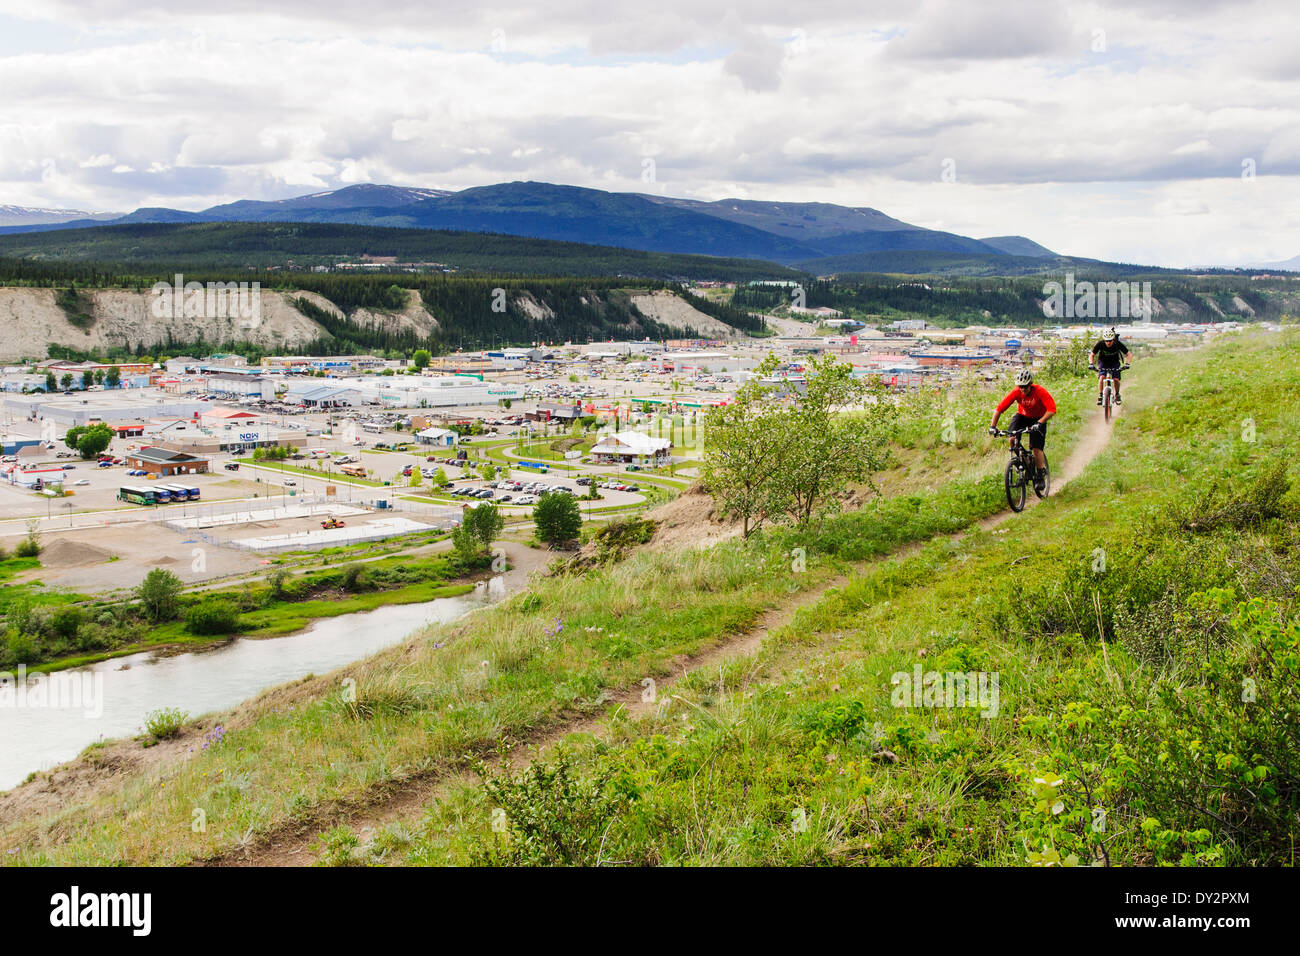 Two mountain bikers riding a trail in Whitehorse, Yukon Territory, Canada Stock Photo